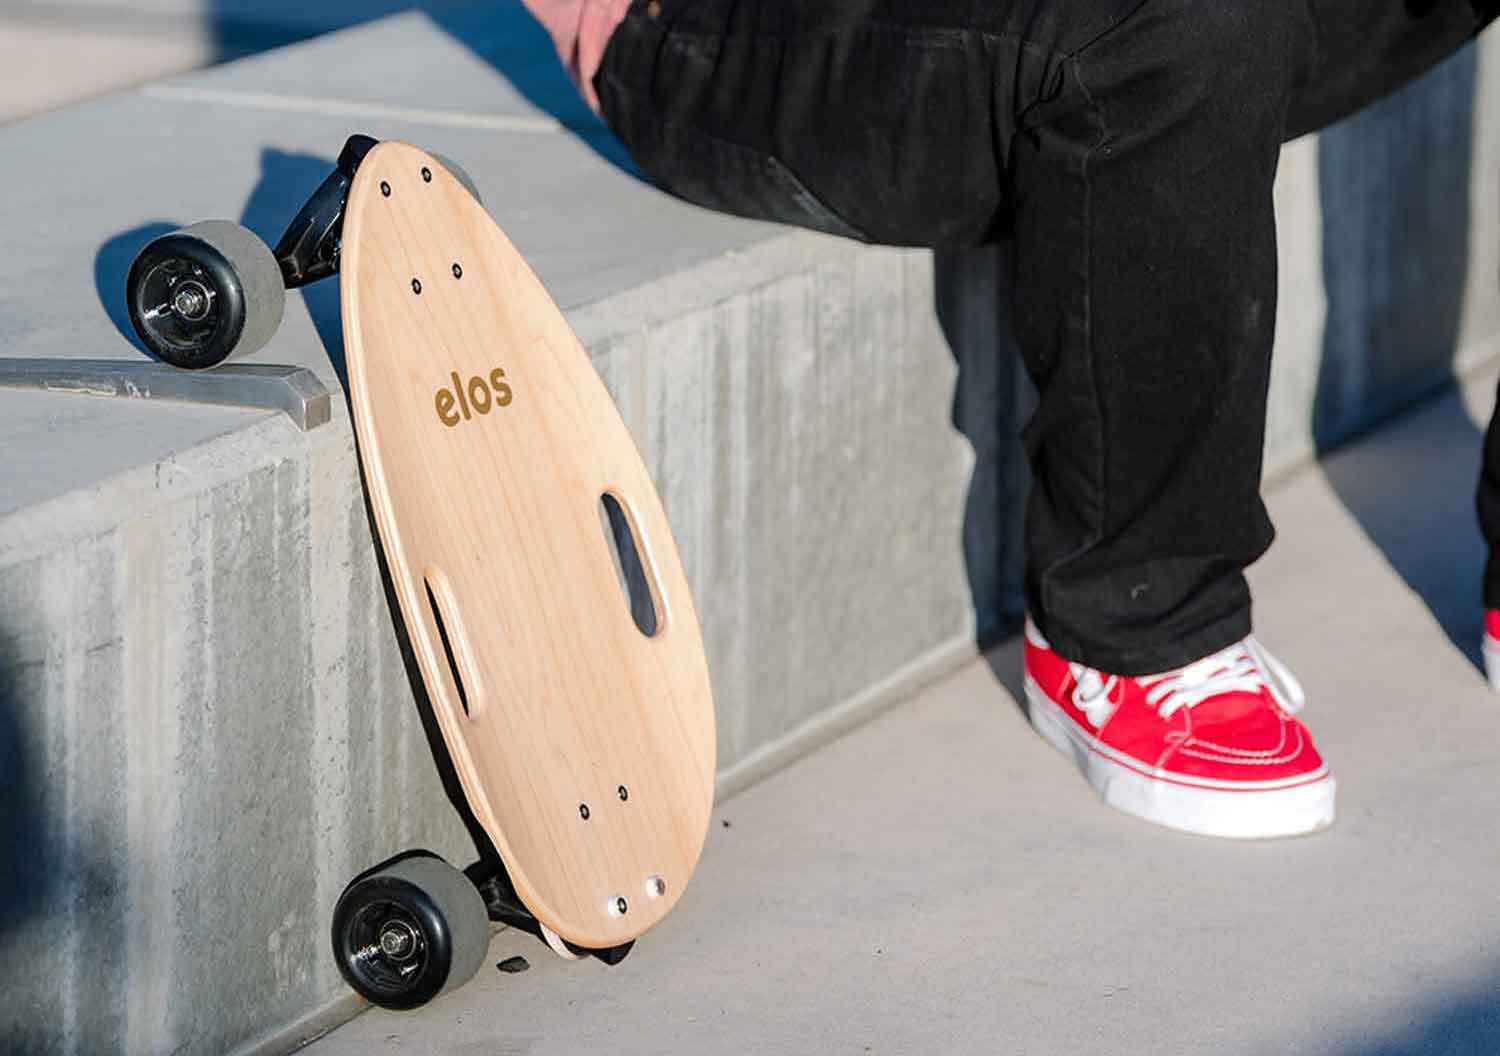 elos-skateboard